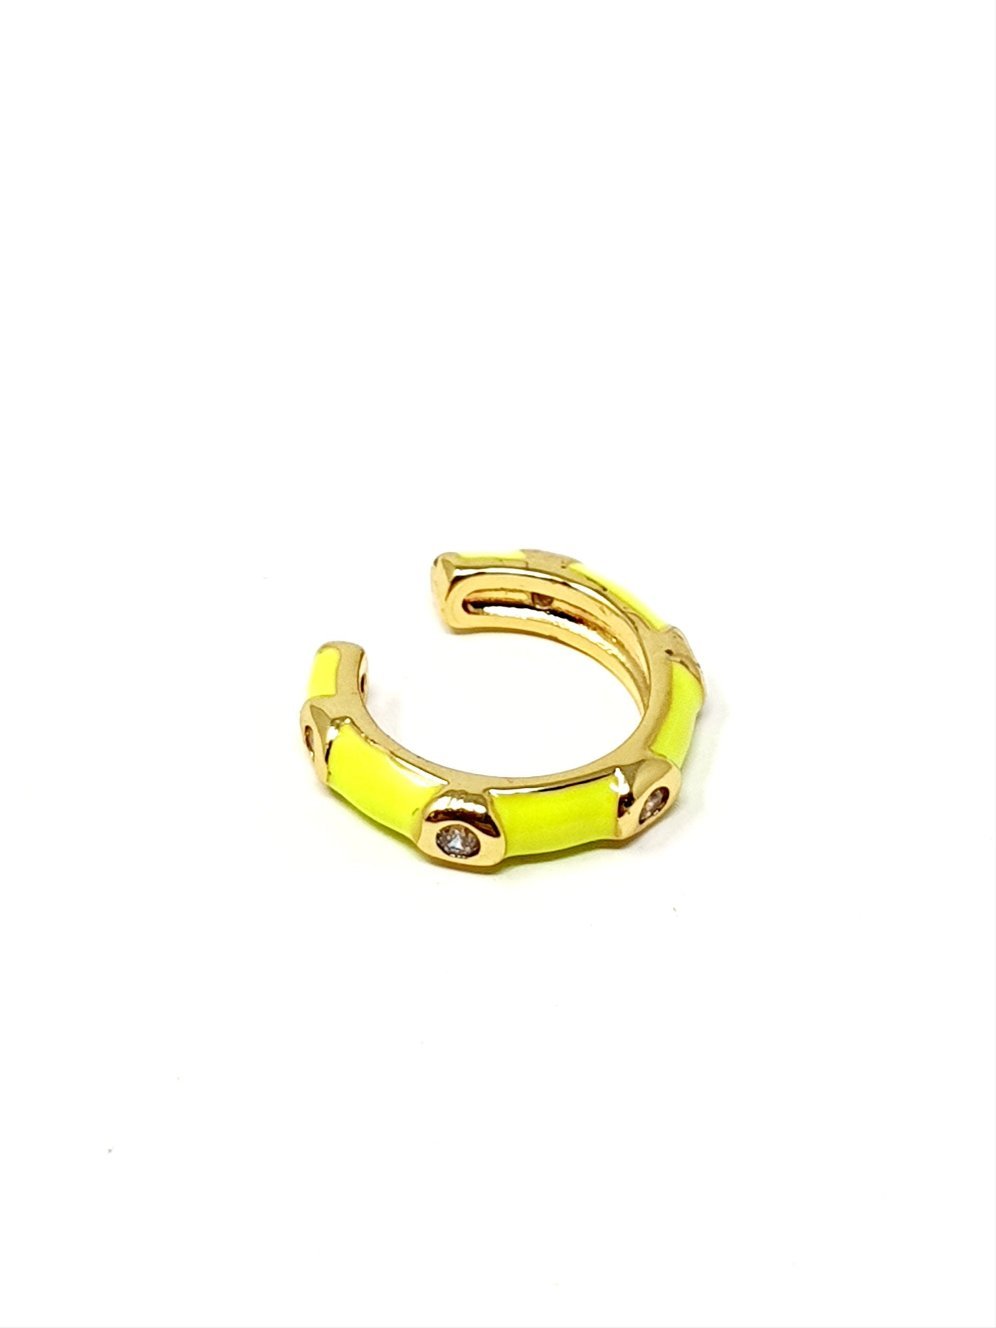 Ear cuff “Positano” Gold & Giallo Fluo - 333HOPE333